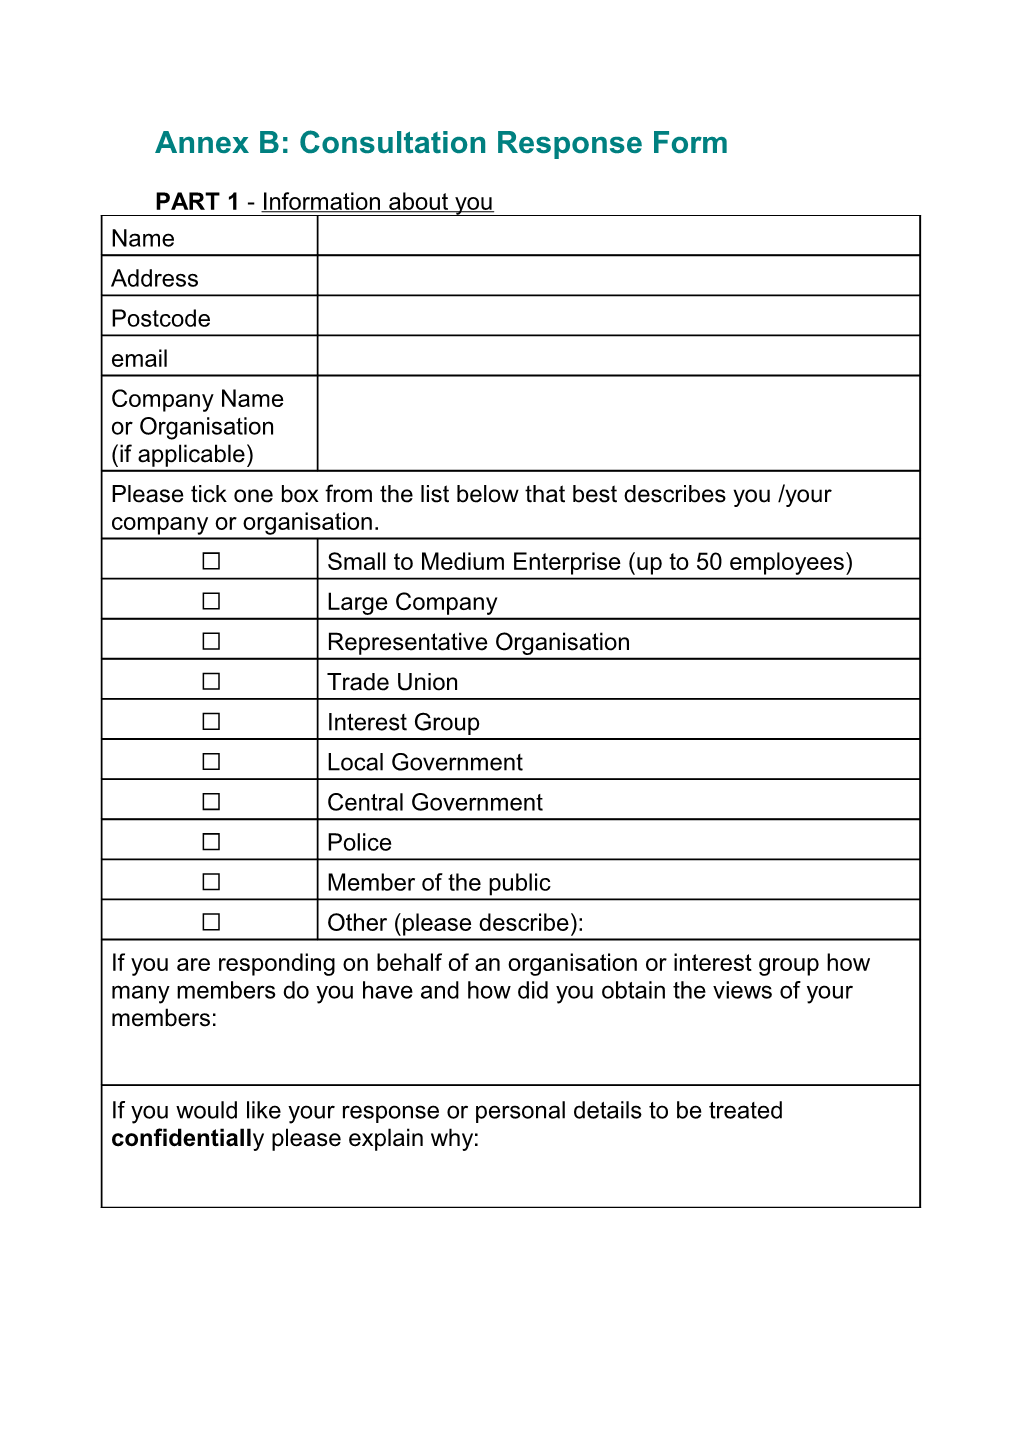 Annex B: Consultation Response Form